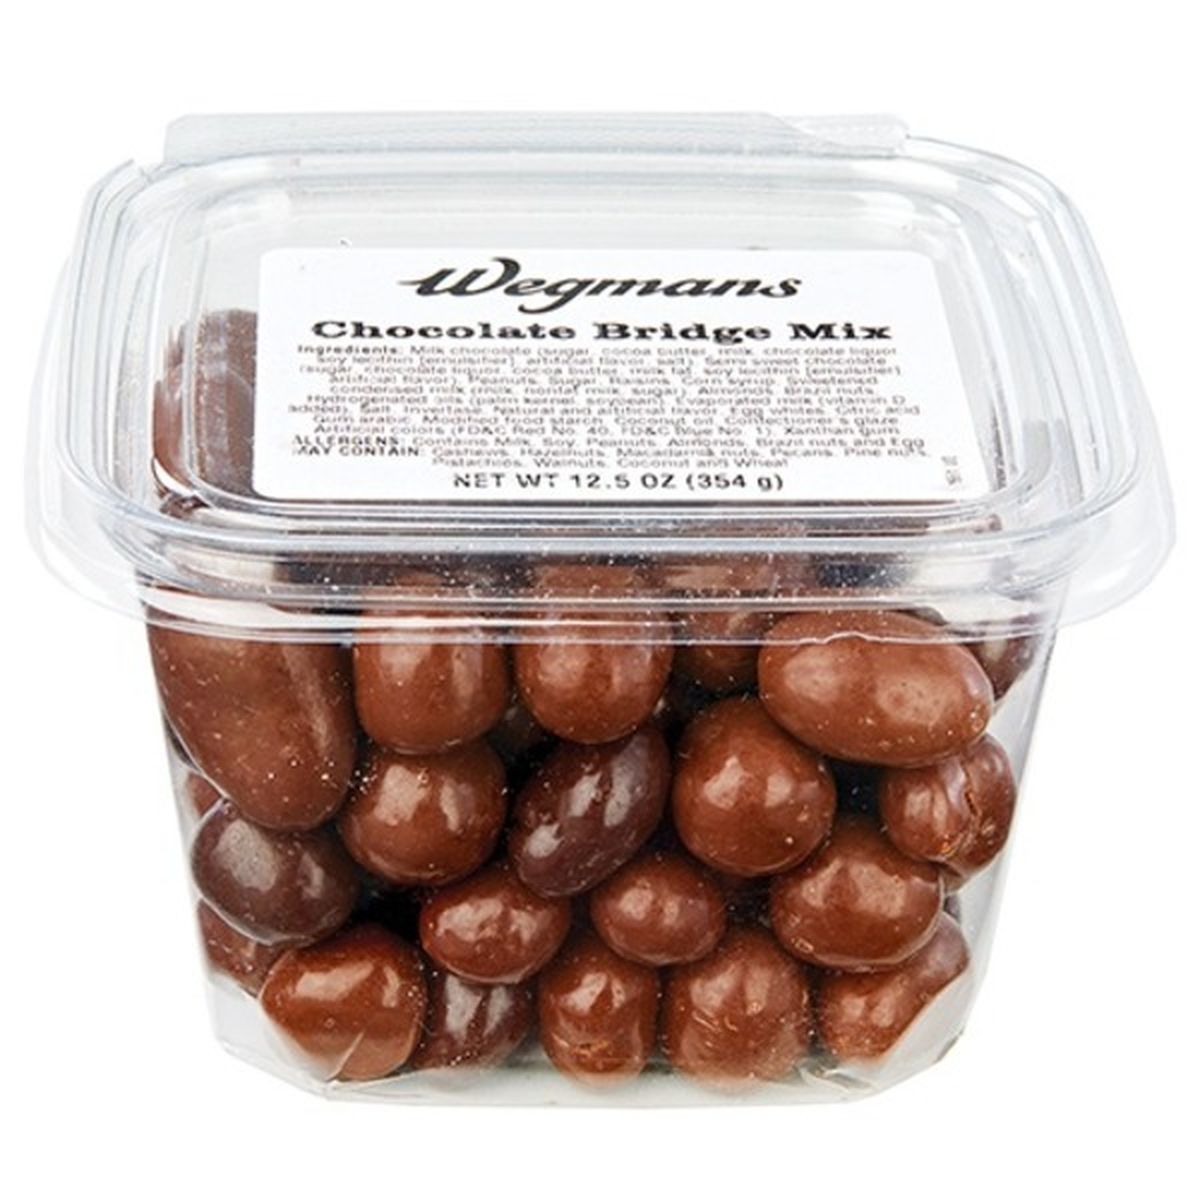 Calories in Wegmans Chocolate Bridge Mix